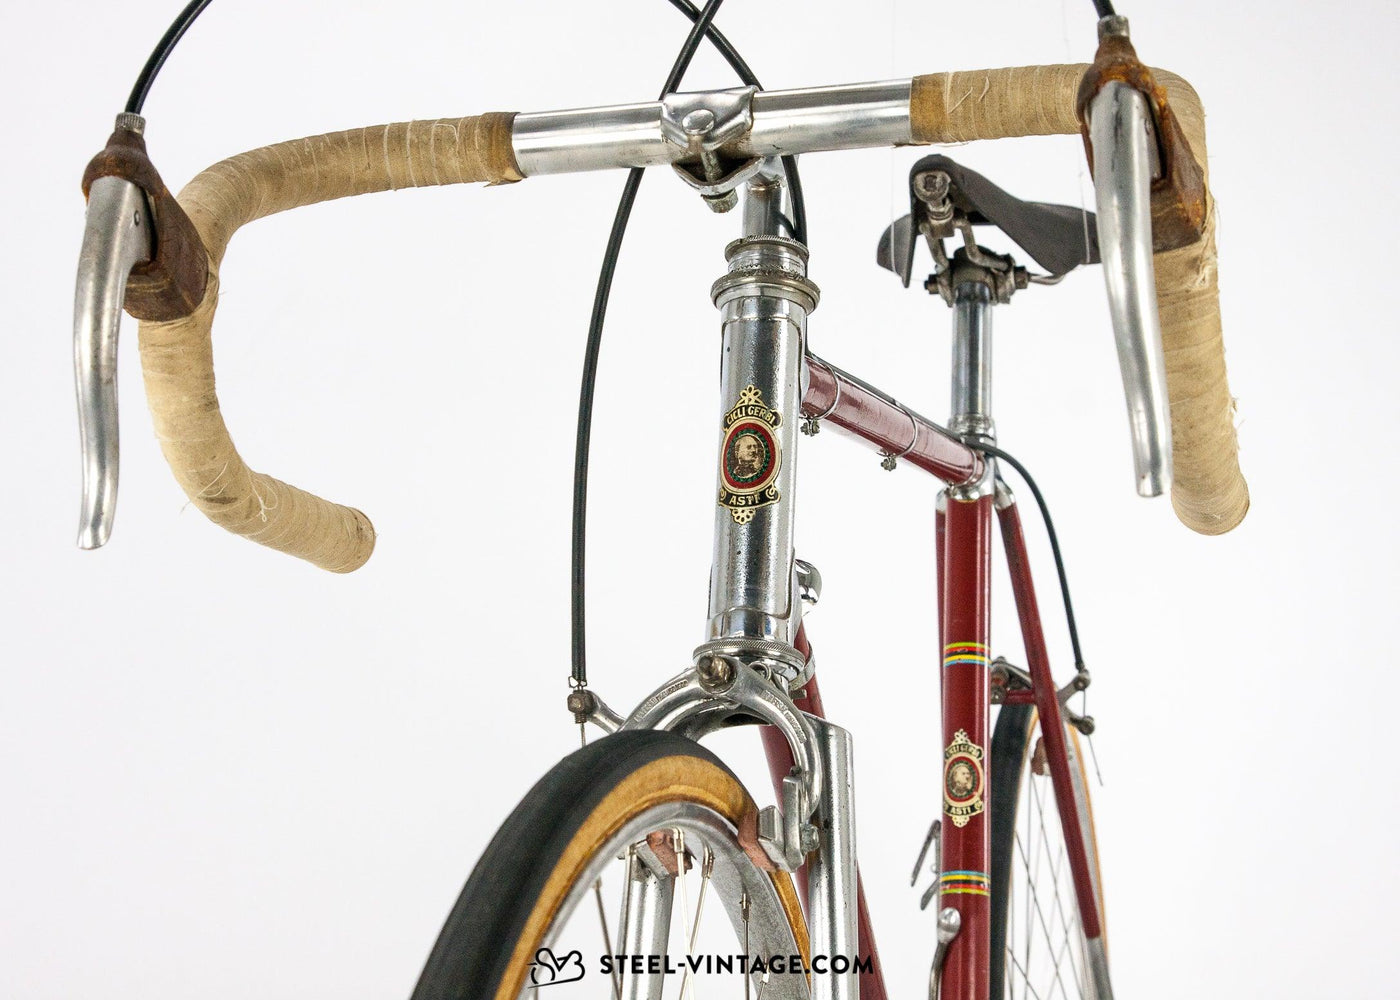 Gerbi Cambio Corsa Collectible Bike 1949 - Steel Vintage Bikes